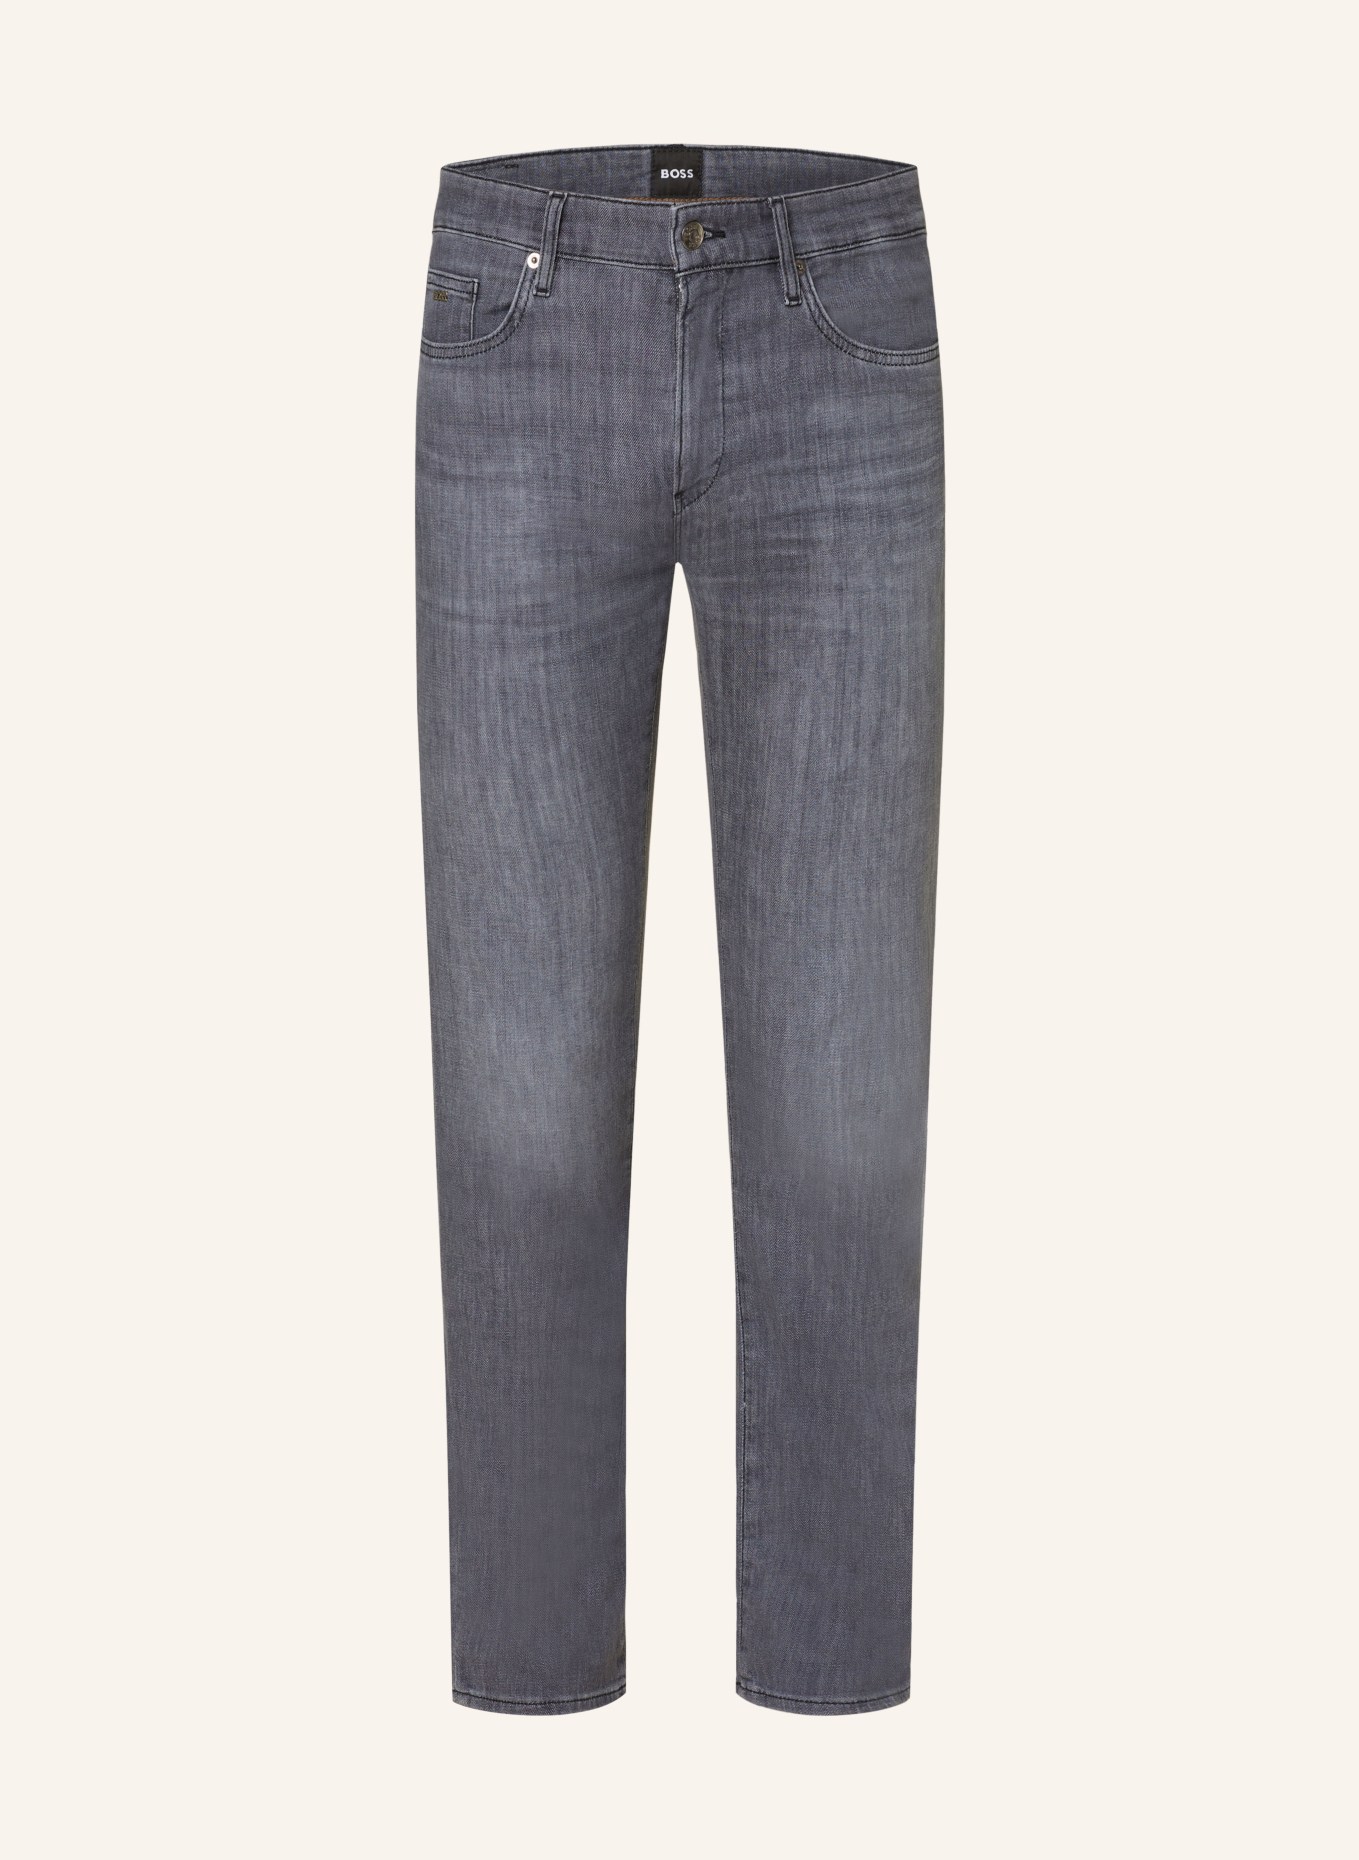 BOSS Jeans DELAWARE3 Extra Slim Fit, Farbe: 040 SILVER (Bild 1)